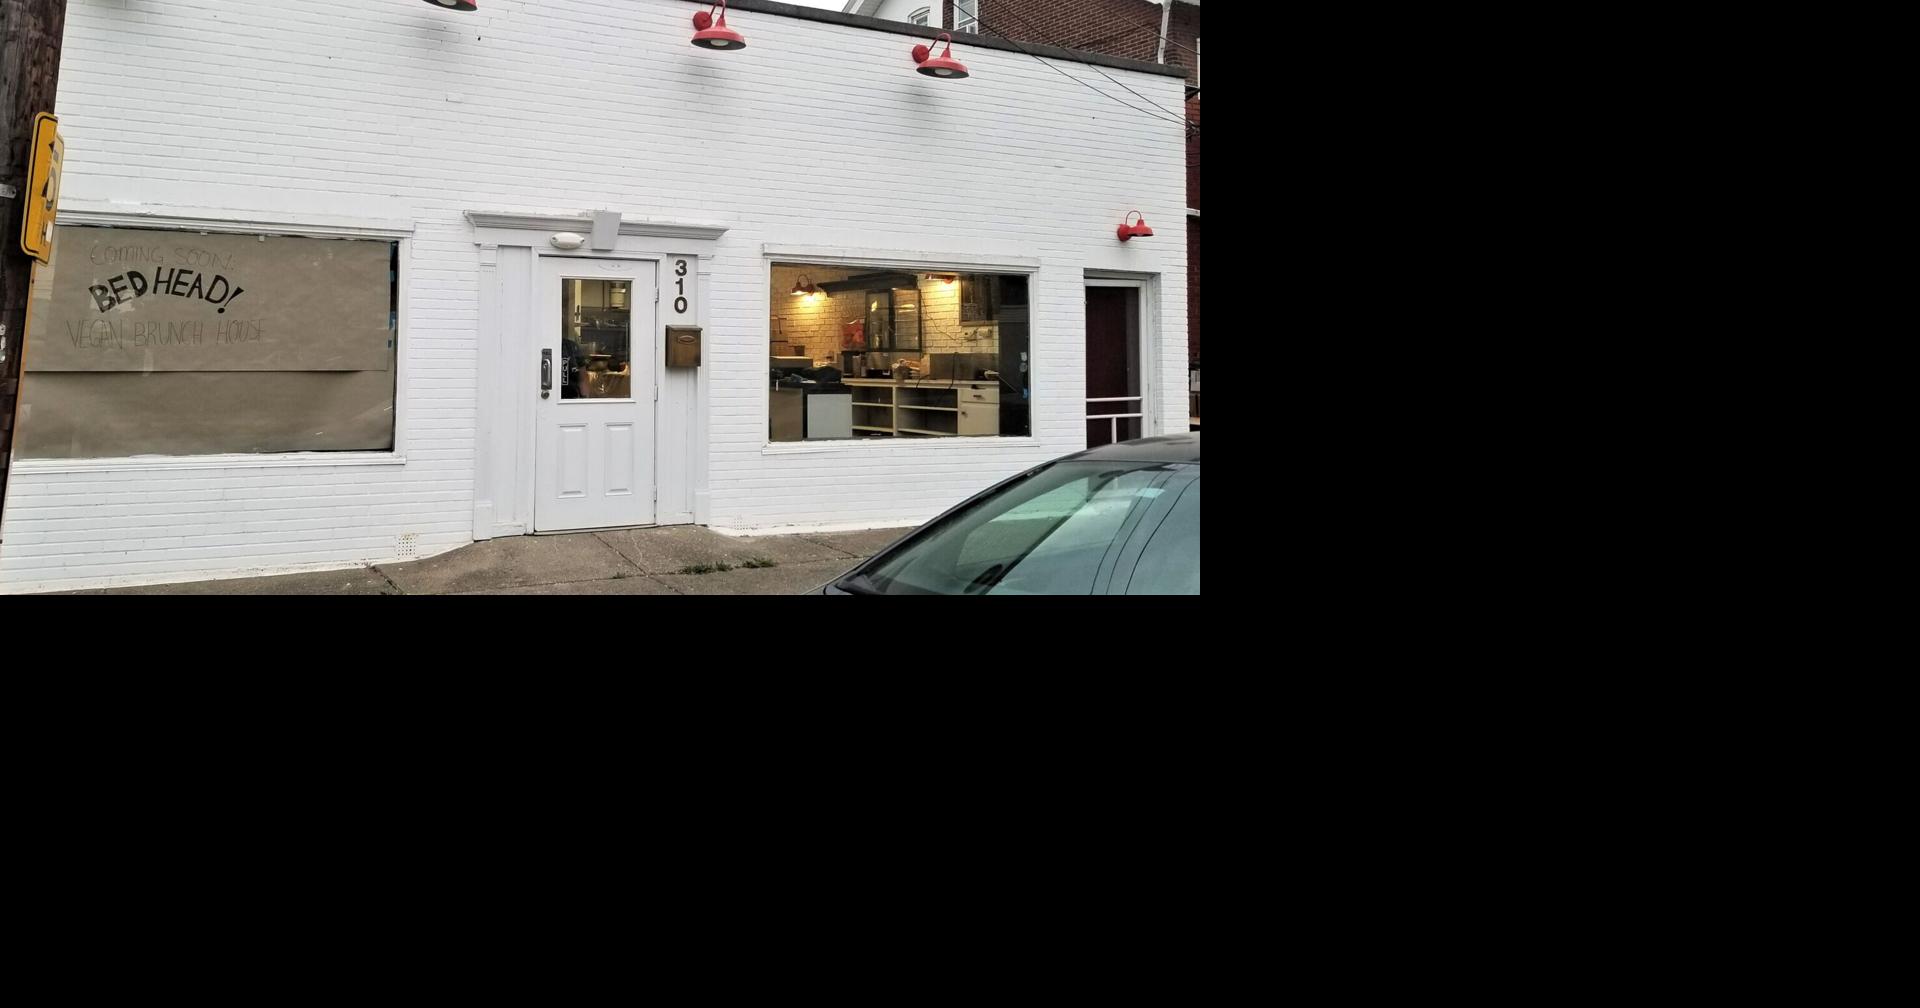 Mattress Head, a vegan brunch cafe, opening shortly in Bethlehem | Eat, Sip, Store